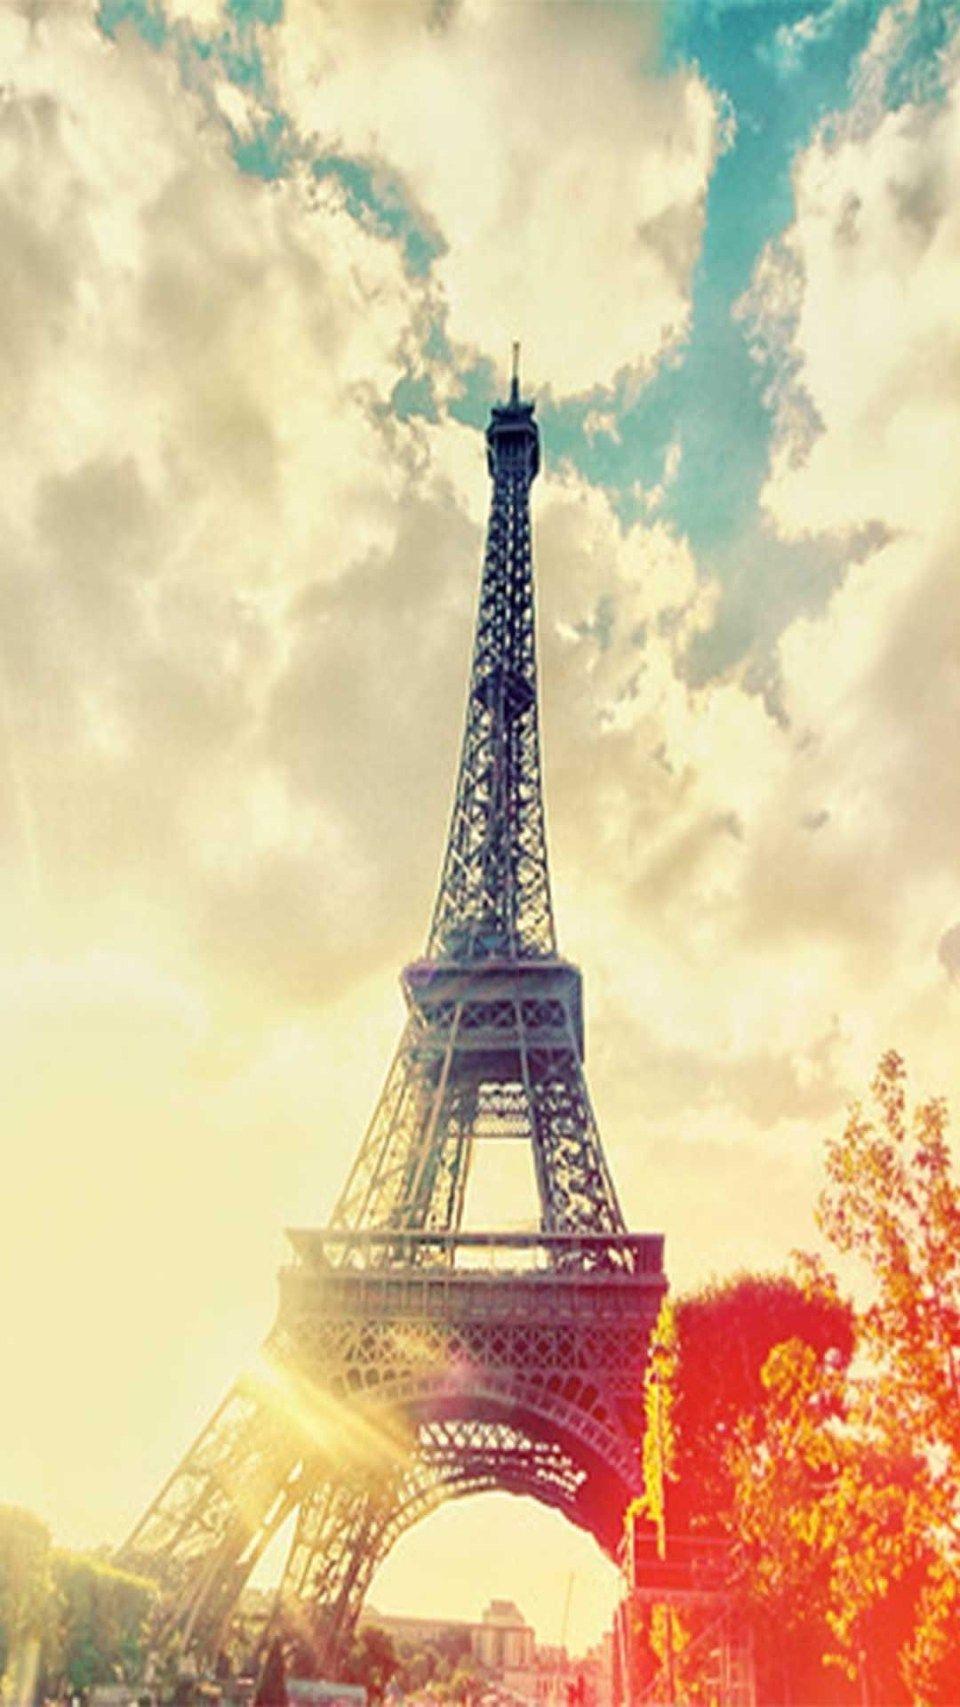 Cute Pink Sky Eiffel Tower Paris Widescreen Sunset Backgrounds Photo Cool  Hd Wallpapers Holiday Travel Photo Paris Wallpaper Wallpaper  Загрузка  изображений